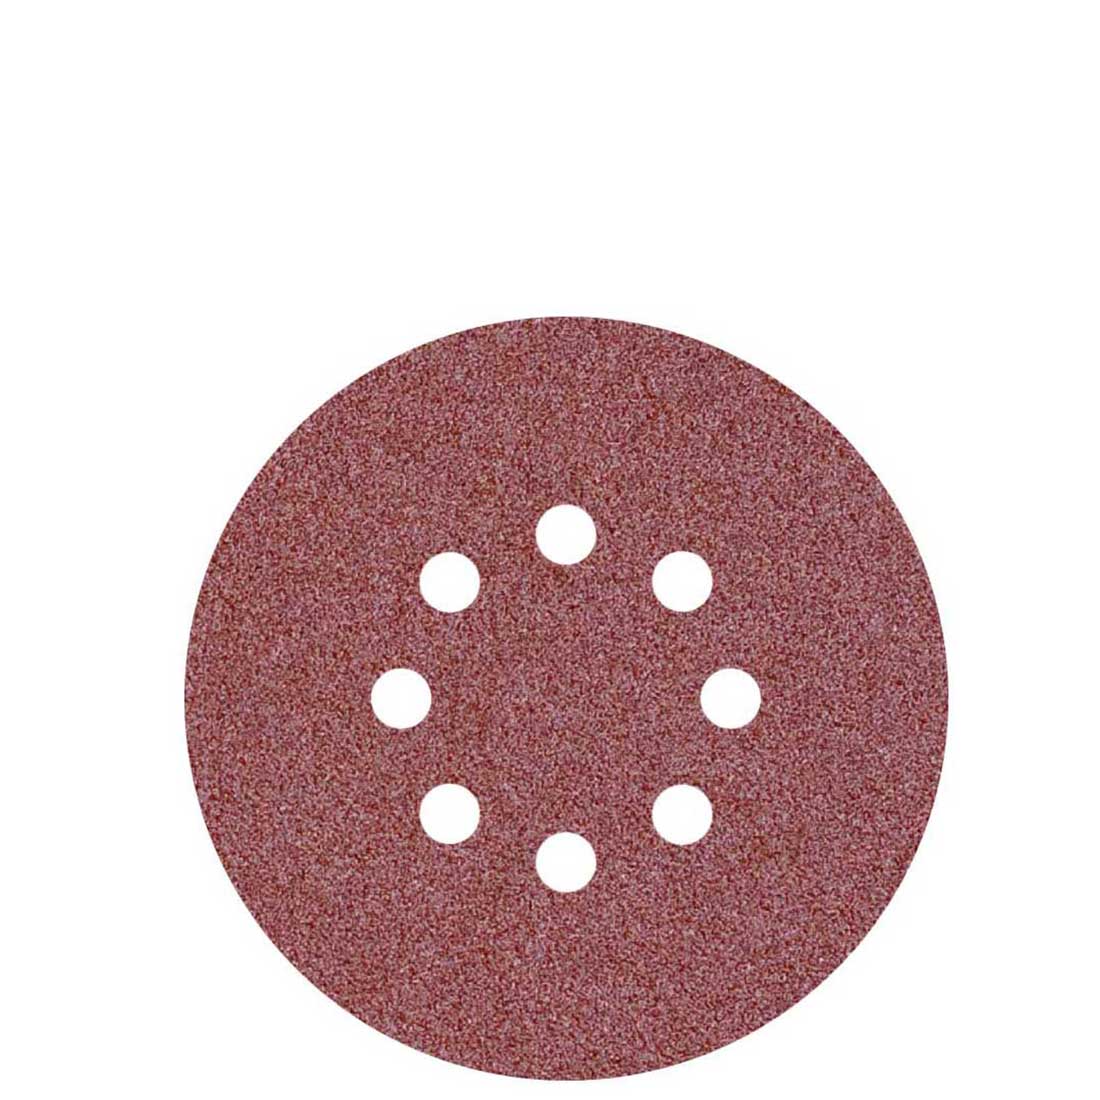 Dischi abrasivi velcrati MioTools per levigatrici rotorbitali, G24–240, Ø 150 mm / 8 fori / corindone normale